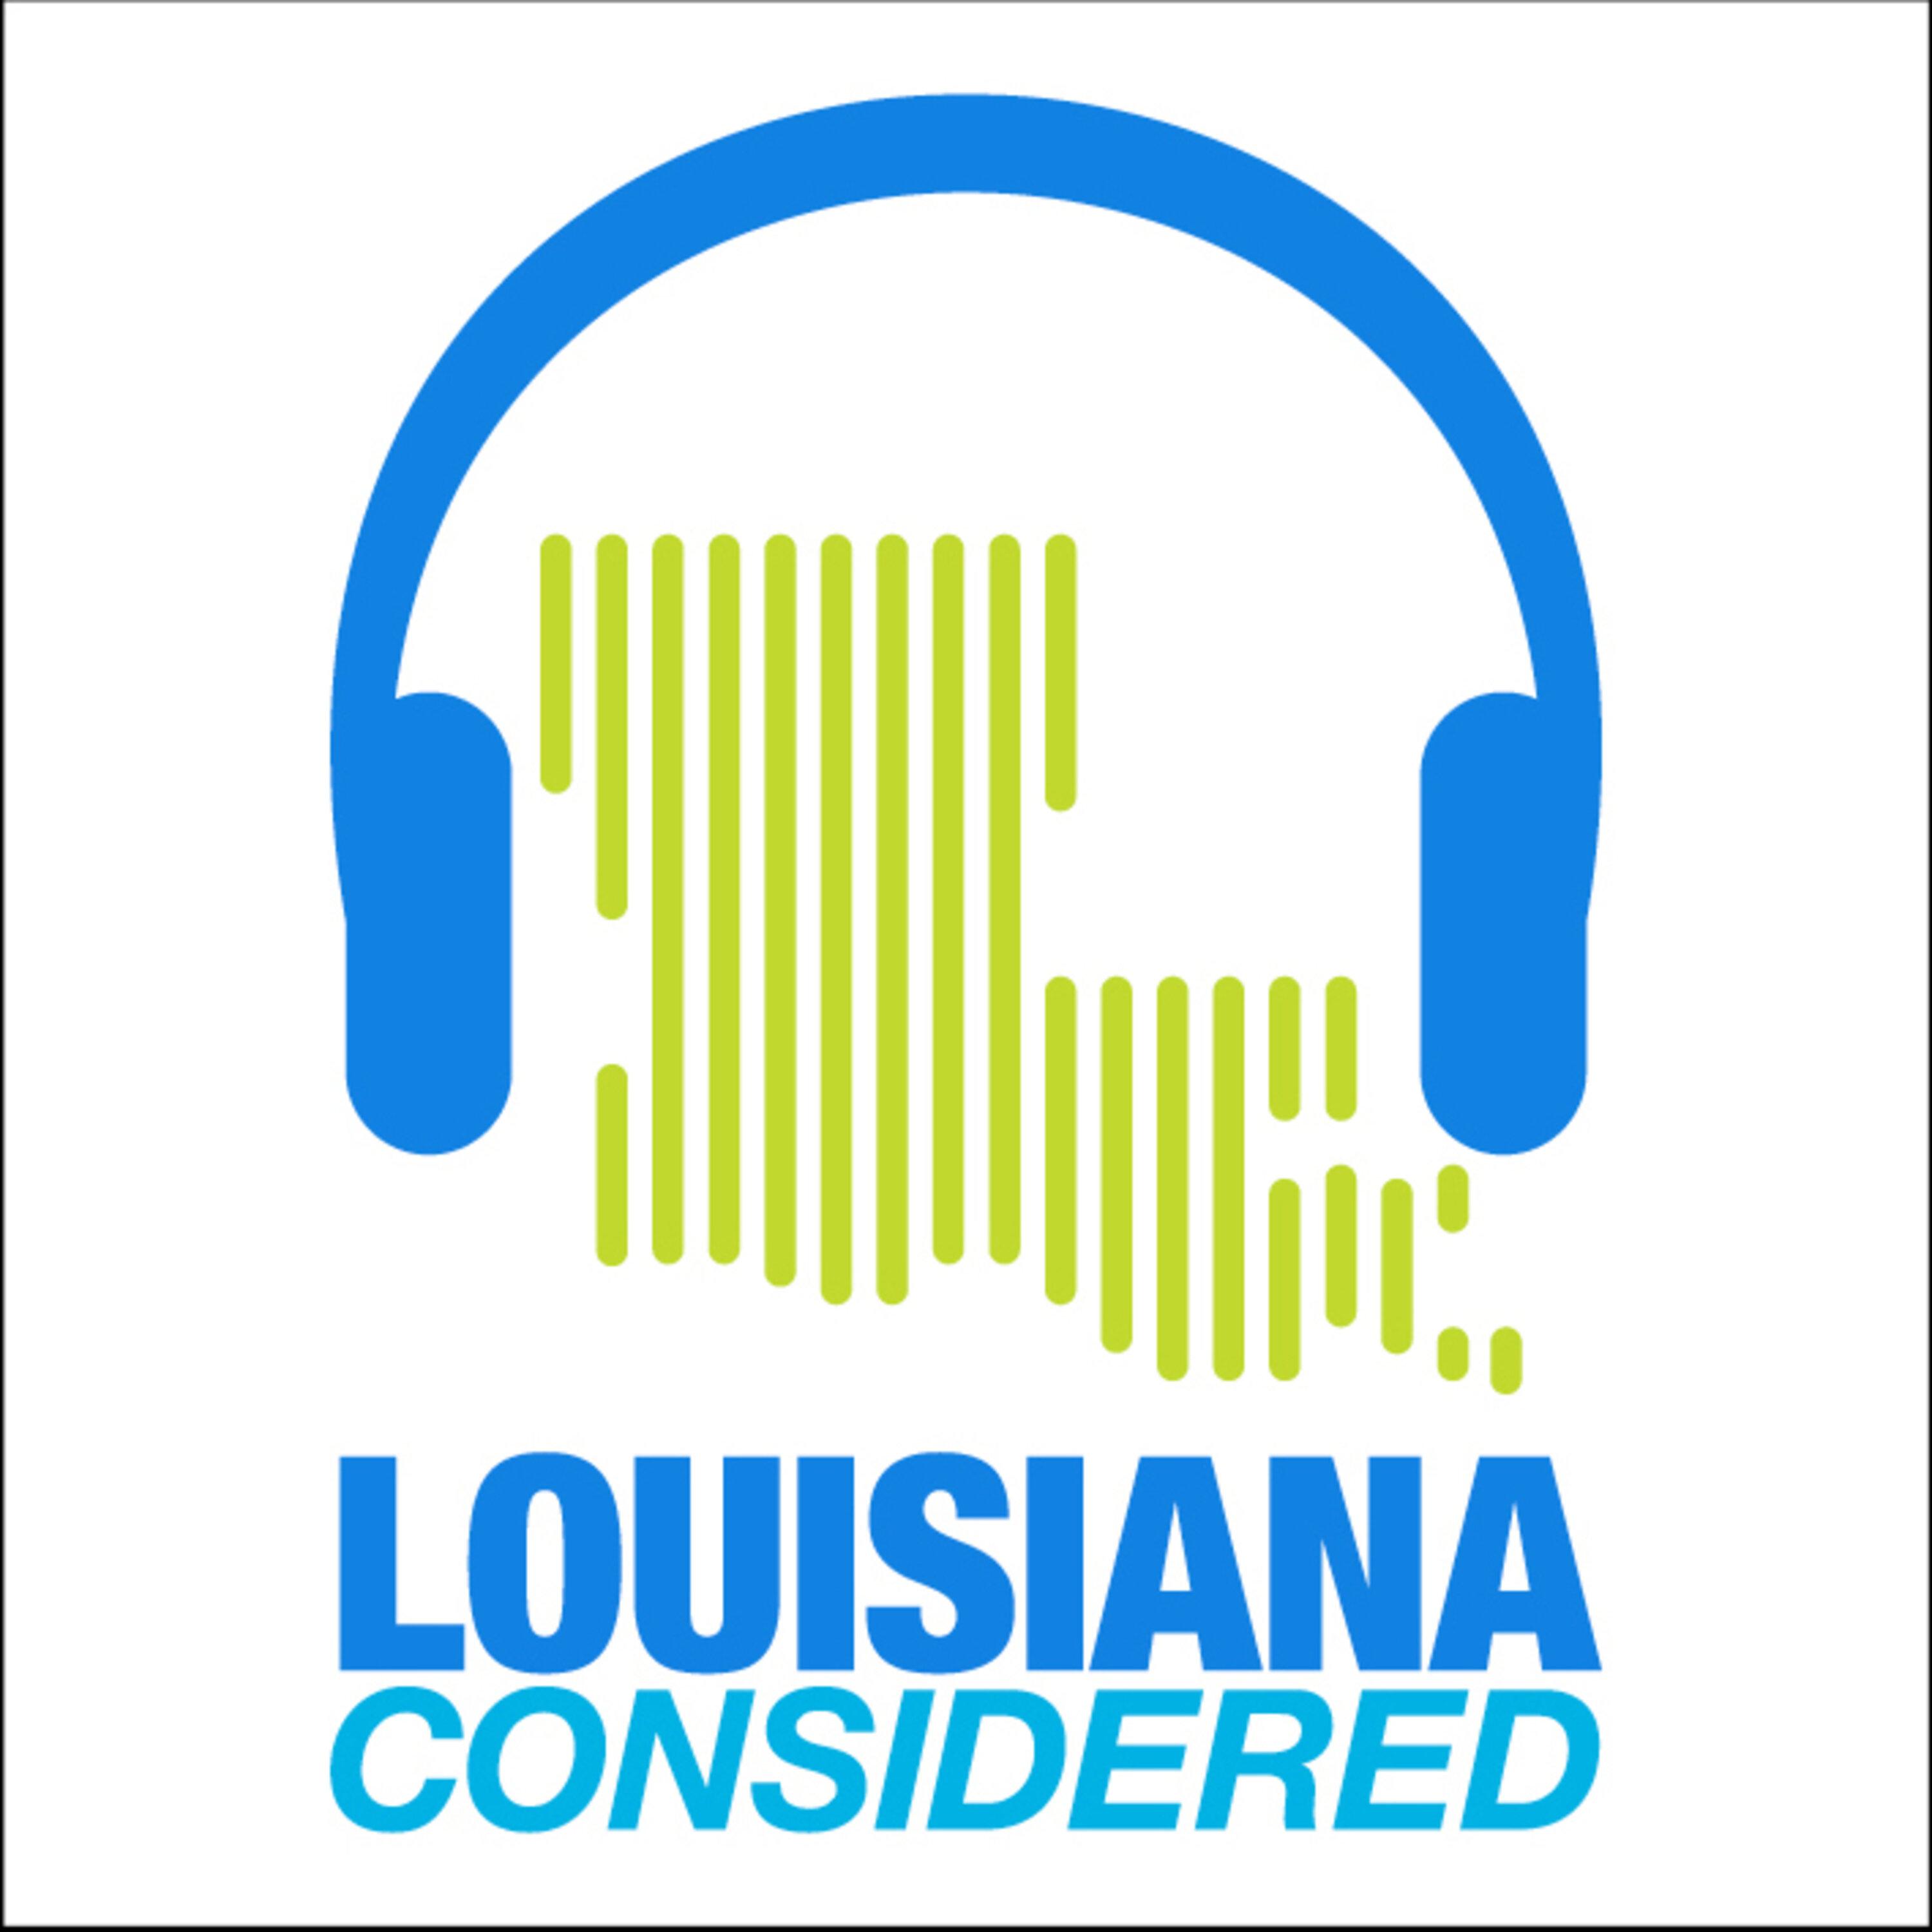 Thumbnail for "Louisiana Considered: Dobbs v. Jackson Women’s Health Organization opening arguments".